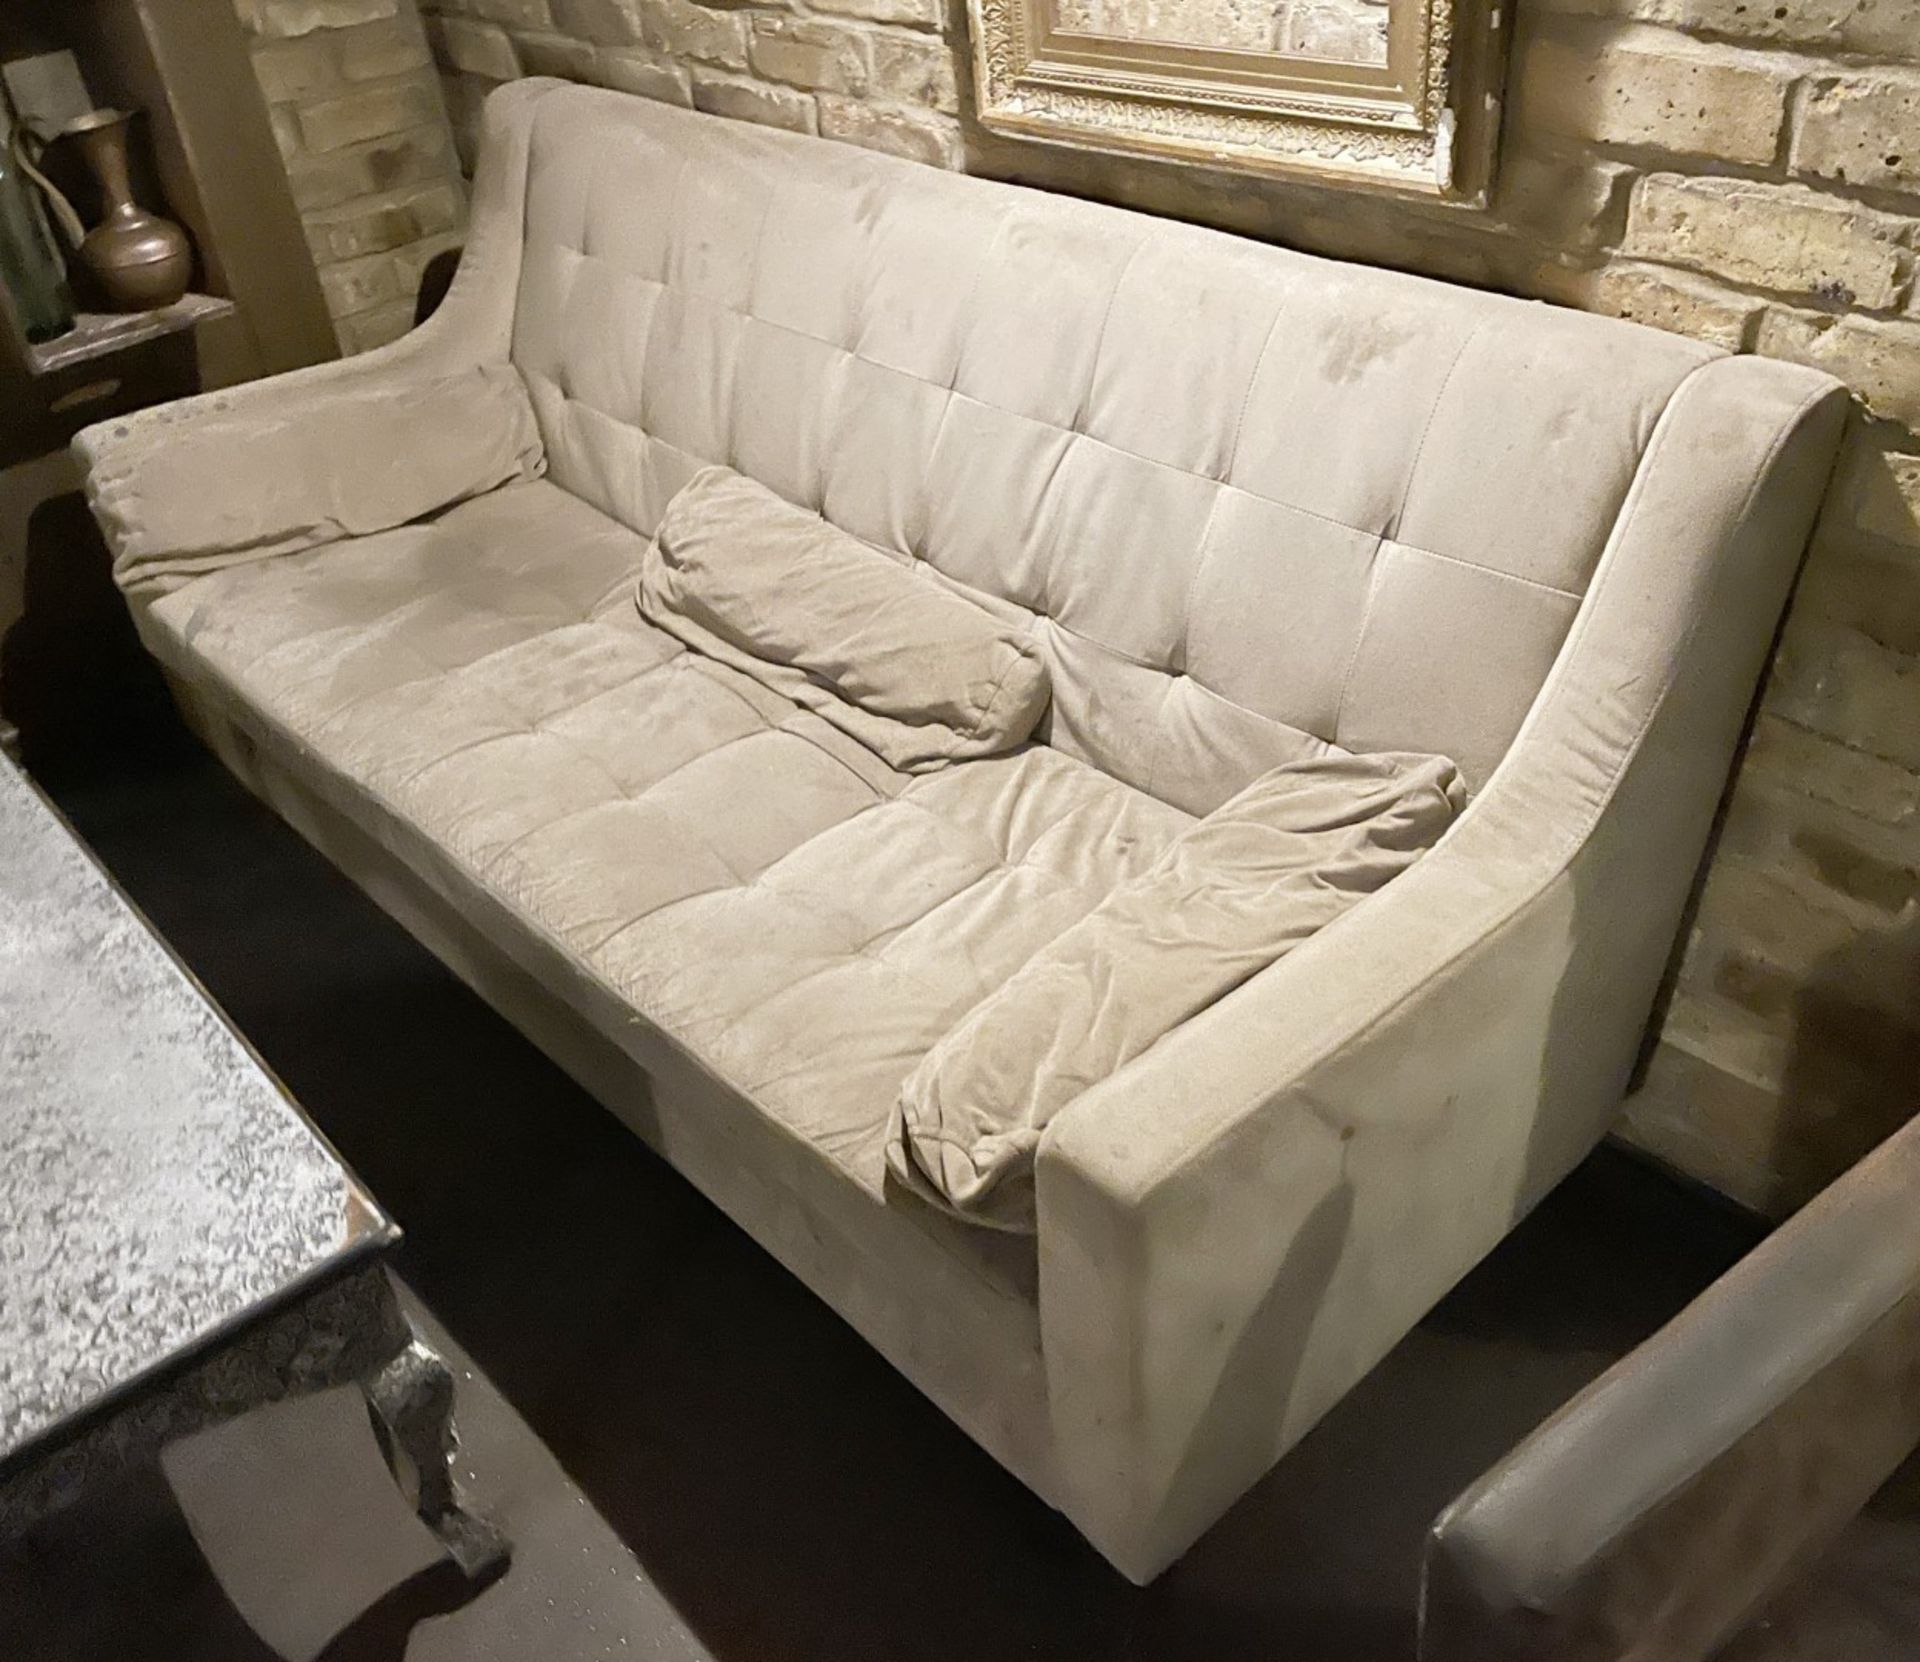 1 x Stylish Tufted Velvet Upholstered 3-Seater Sofa in a Neutral Off-white Hue